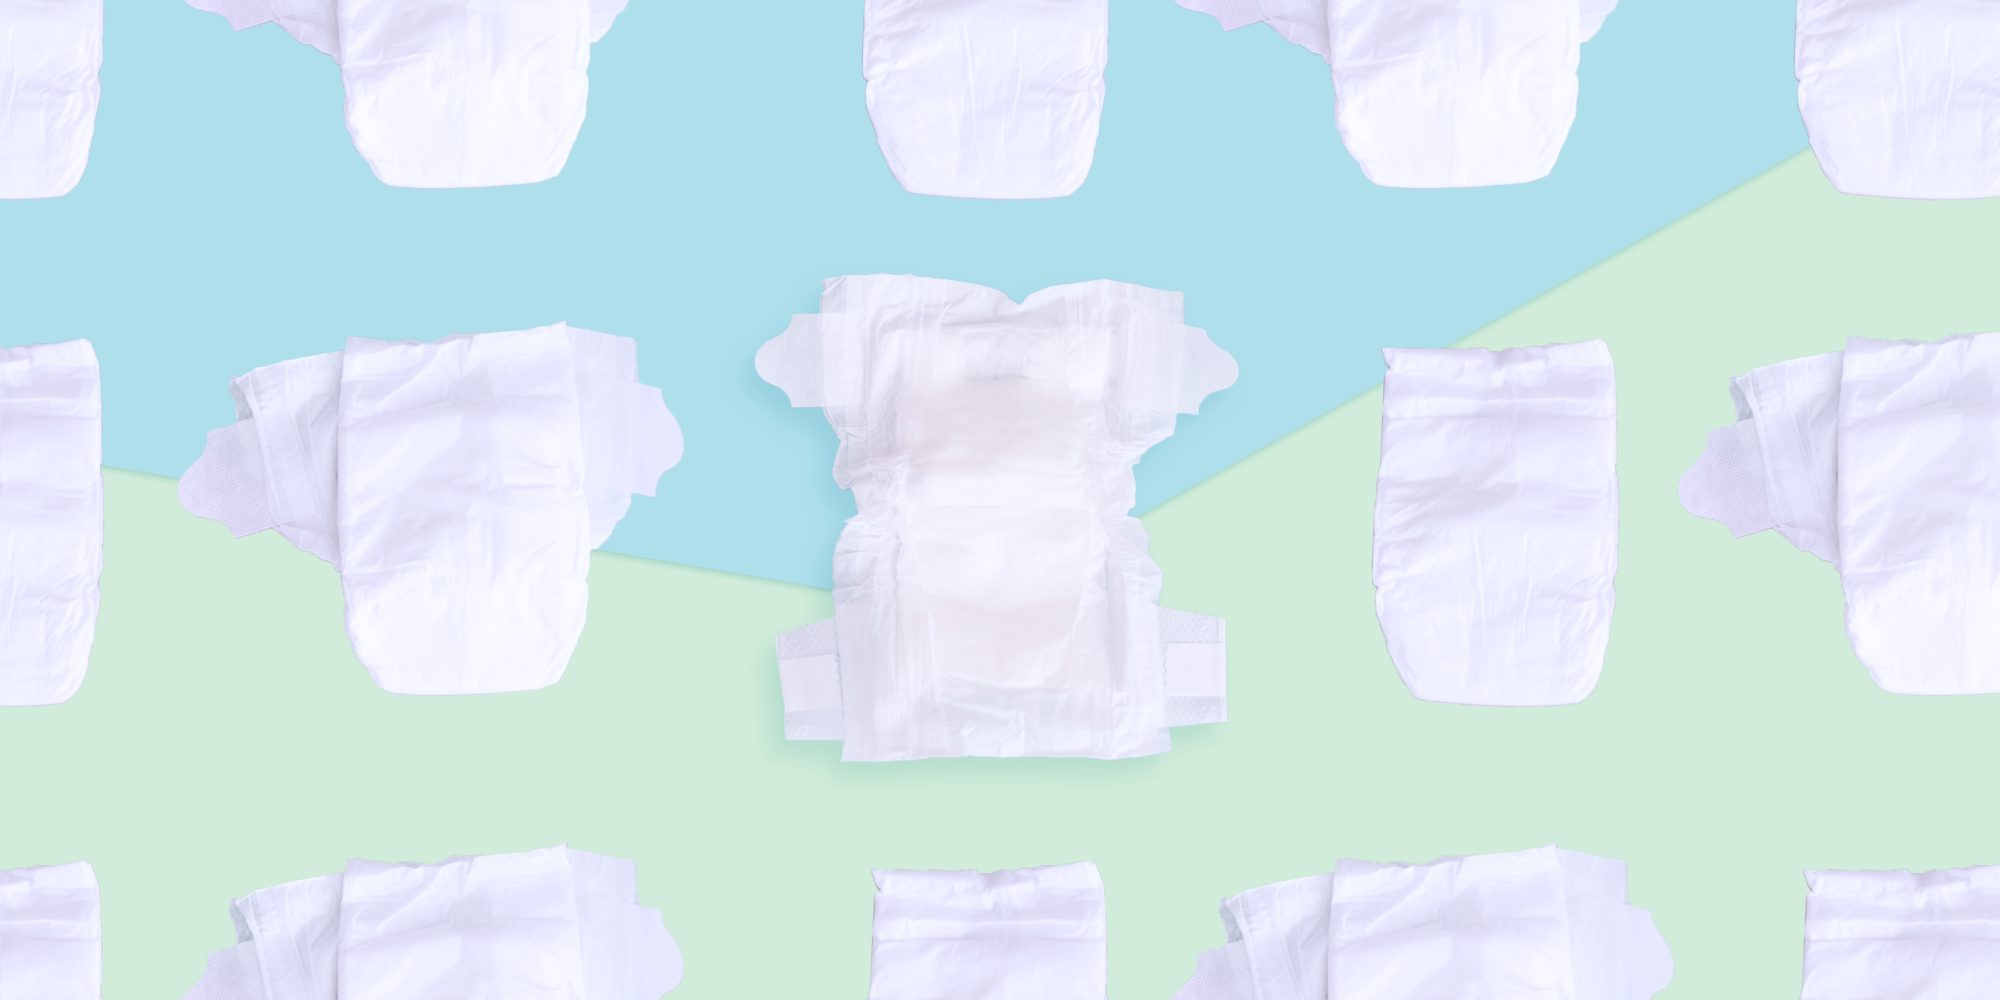 best diapers for newborns 2018